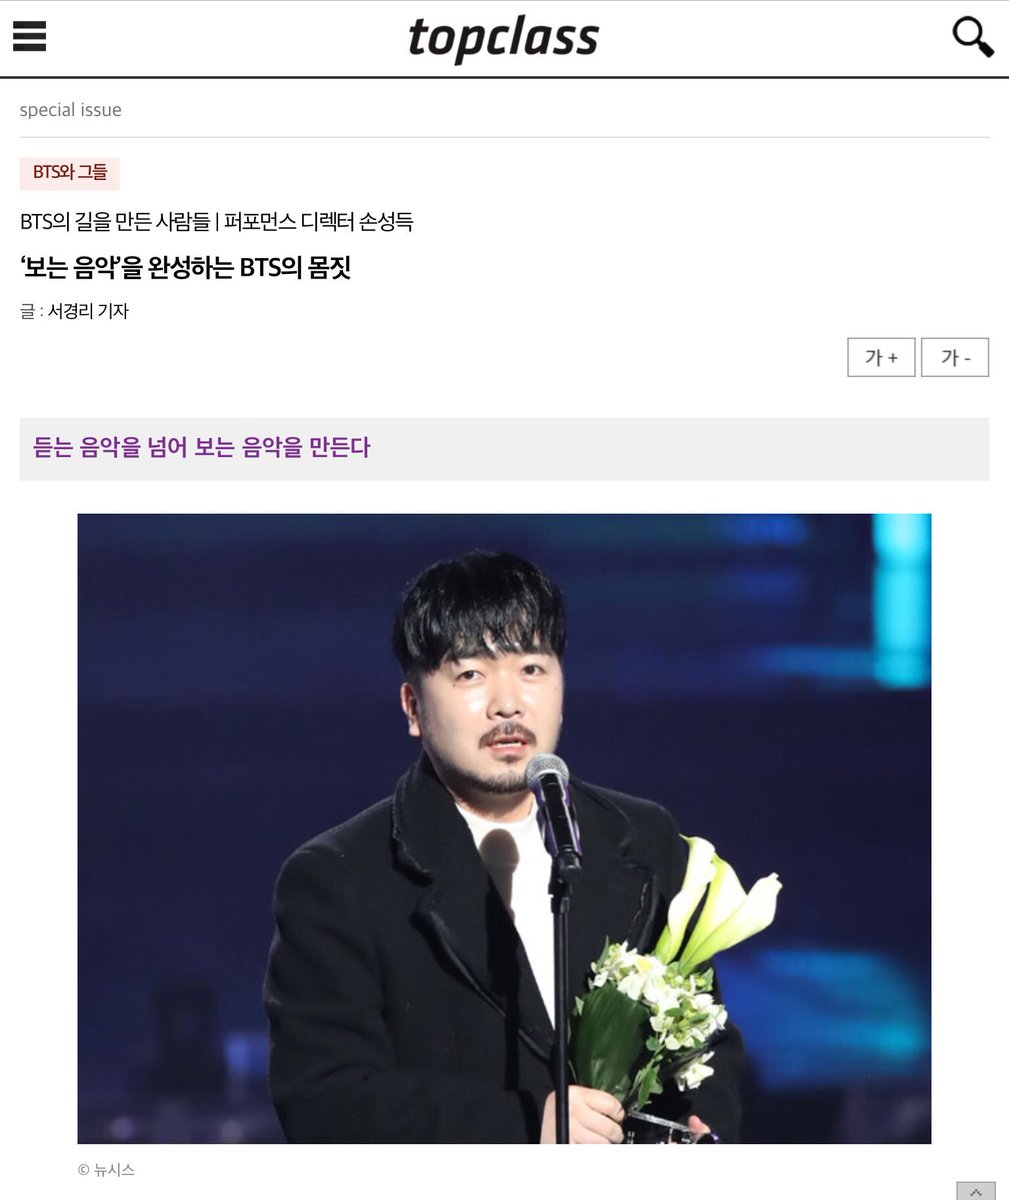 Here’s the article on Son Sungdeuk.  @BTS_twt  #BTS  #방탄소년단   http://topclass.chosun.com/mobile/board/view.asp?catecode=R&tnu=201906100013